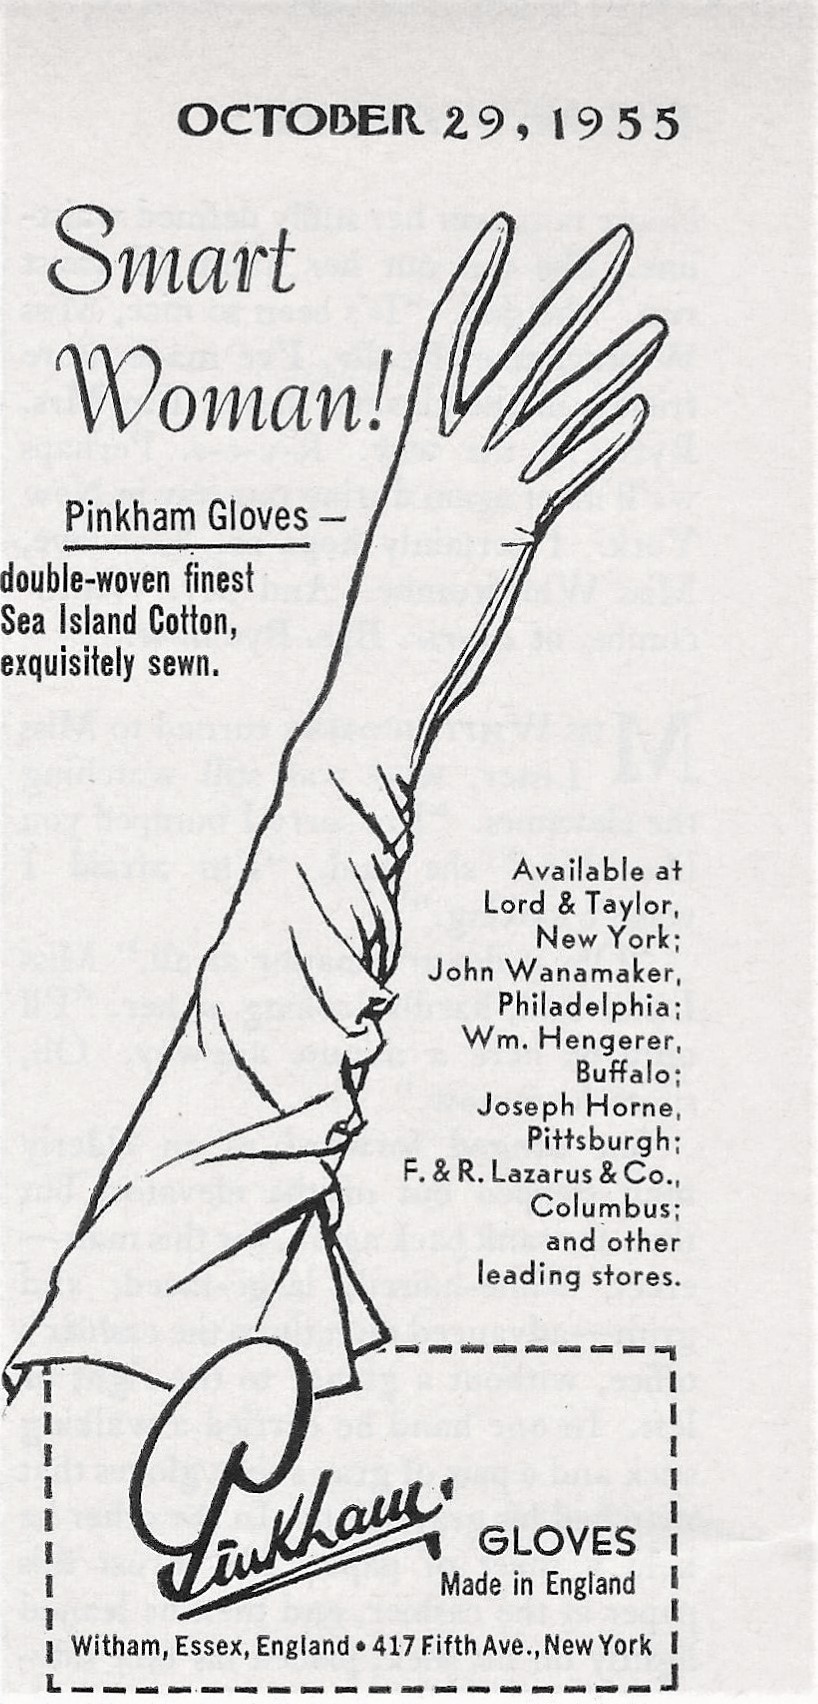 New Yorker 29 10 1955